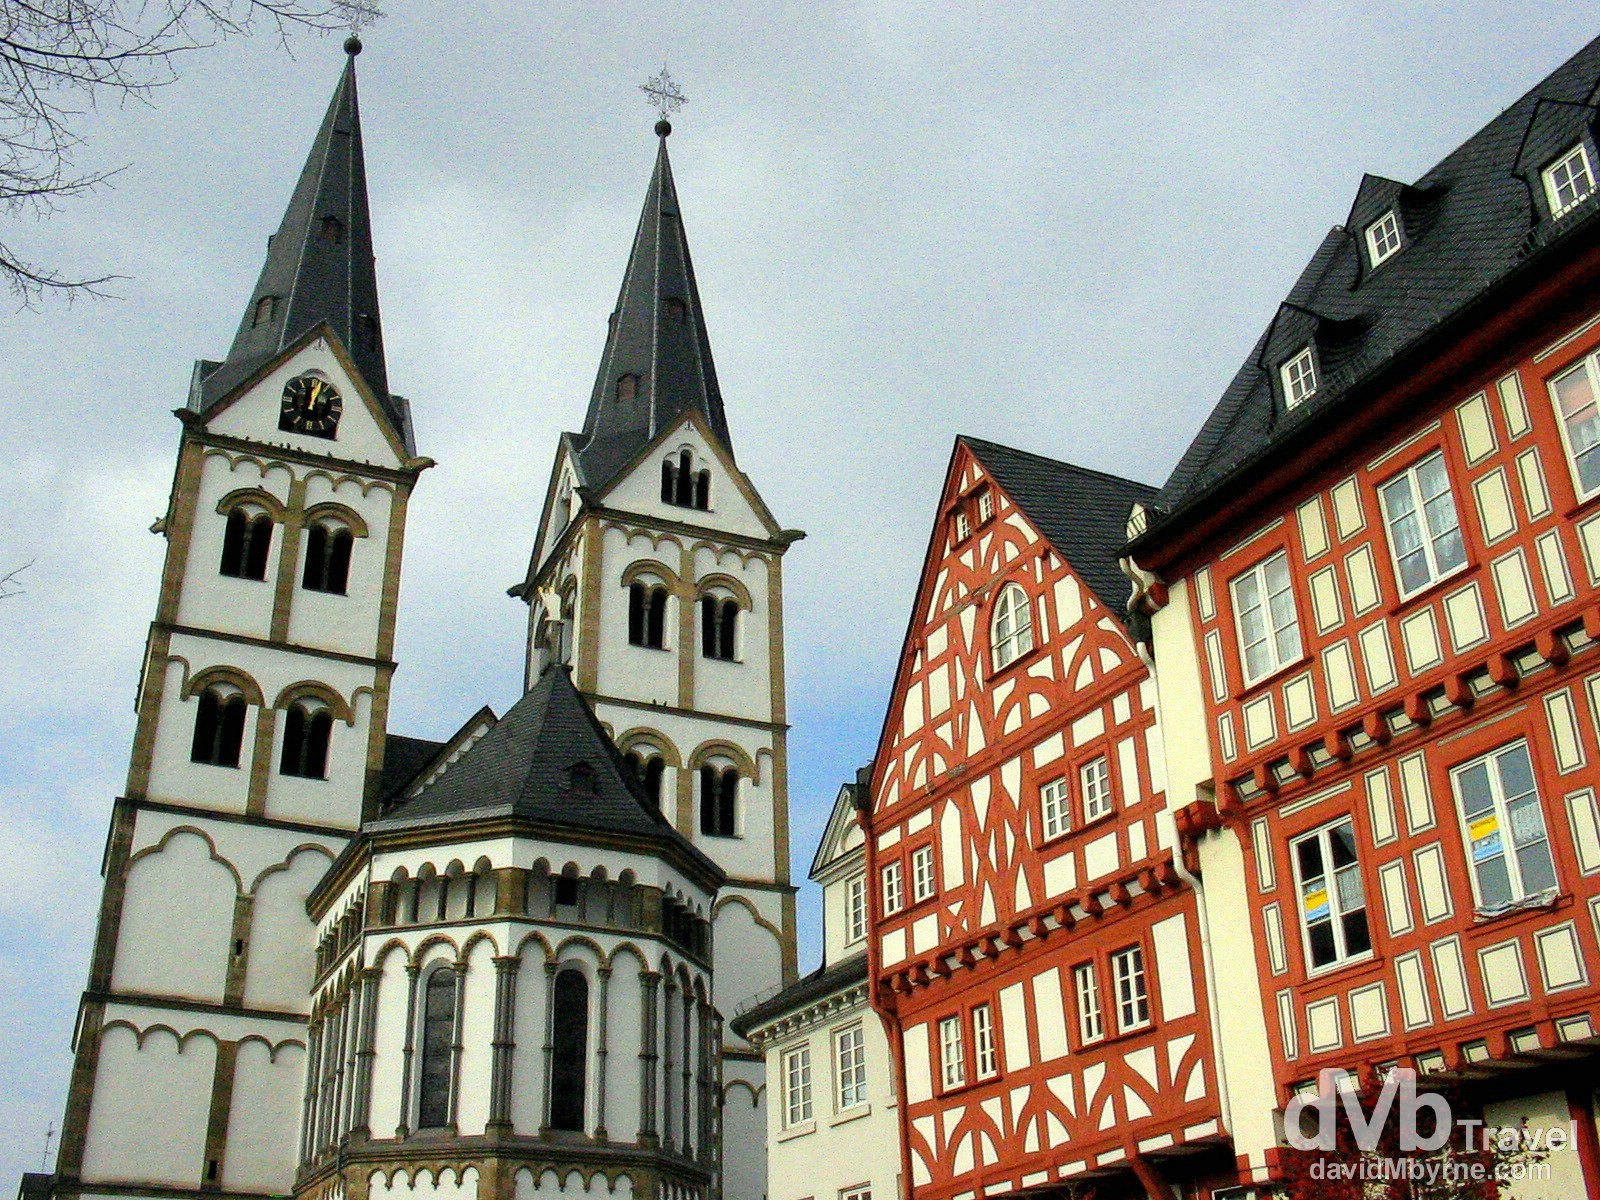 The twin towers of Saint Severus Church in Marktplatz, Boppard, Rhineland, in western Germany. February 18th 2005.